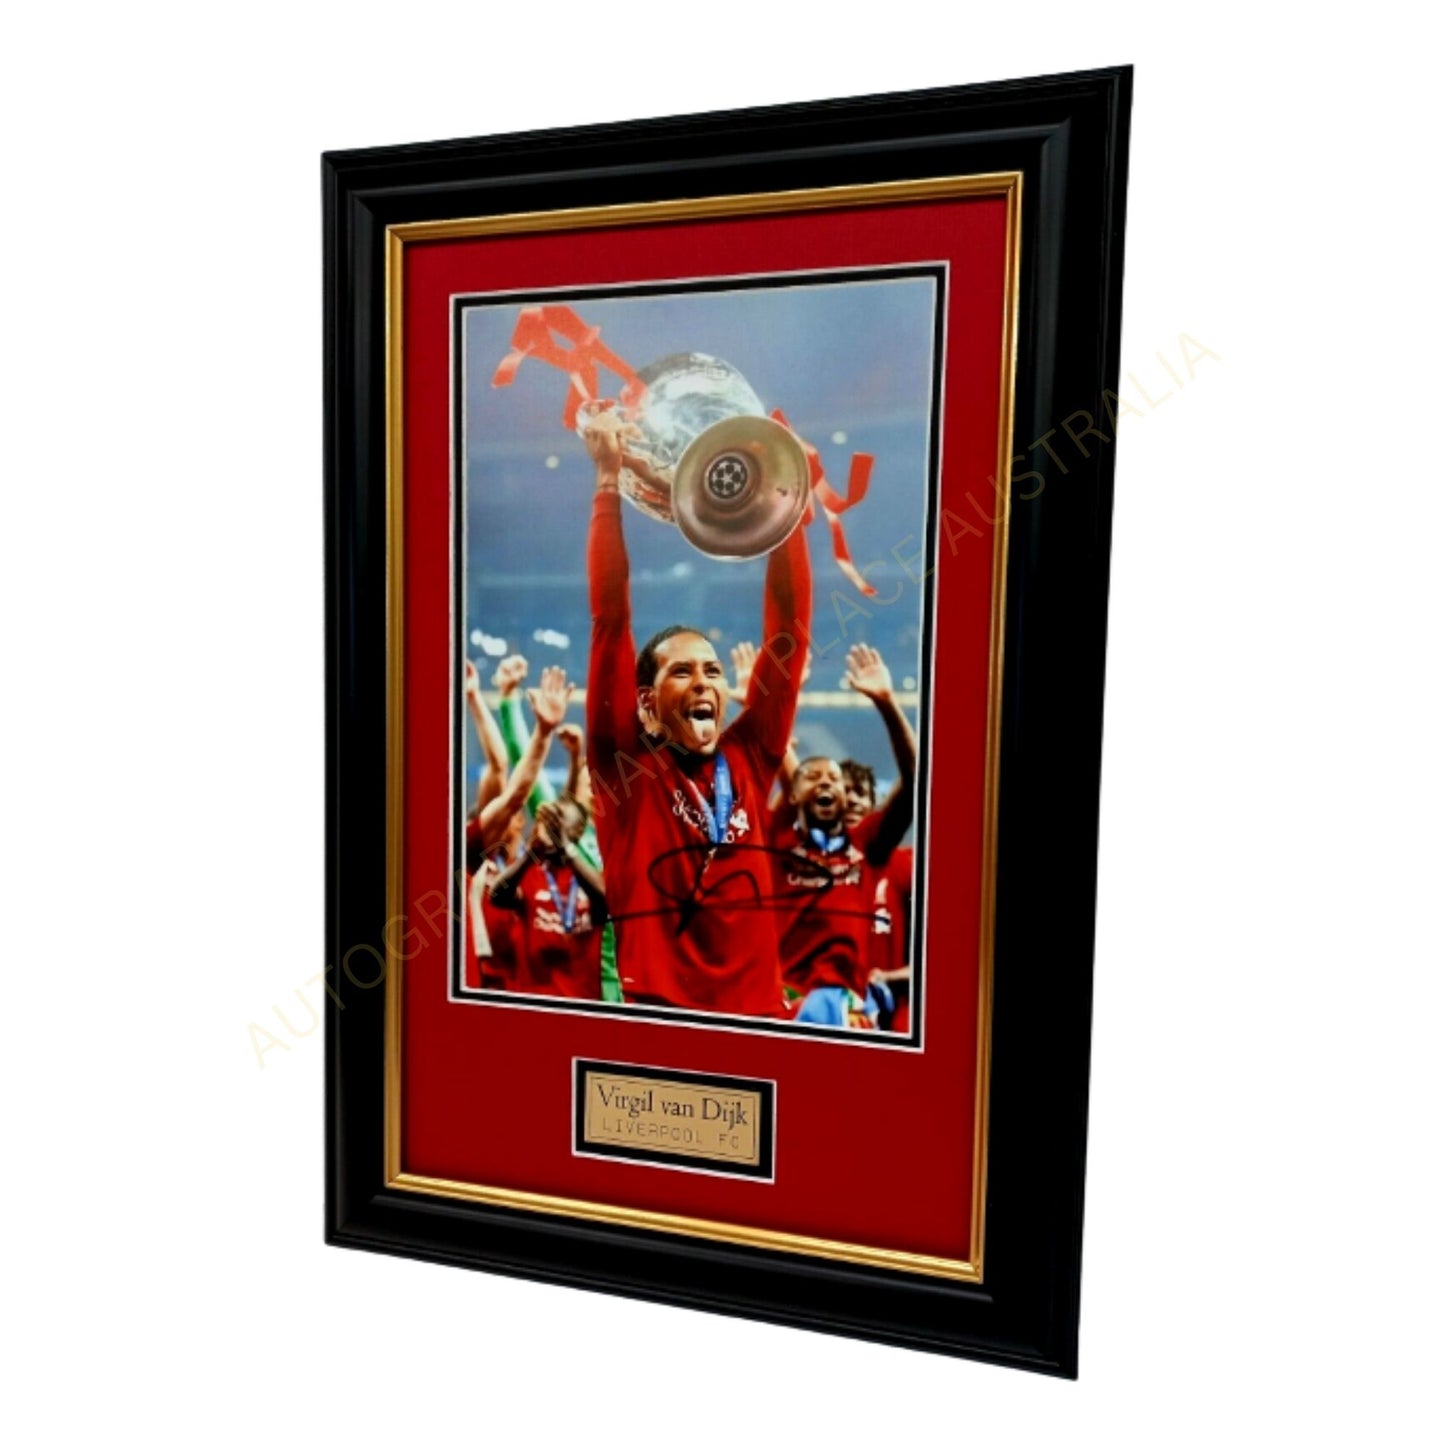 Virgil van Dijk Signed Framed Liverpool FC UEFA CHAMPIONS LEAGUE 2019